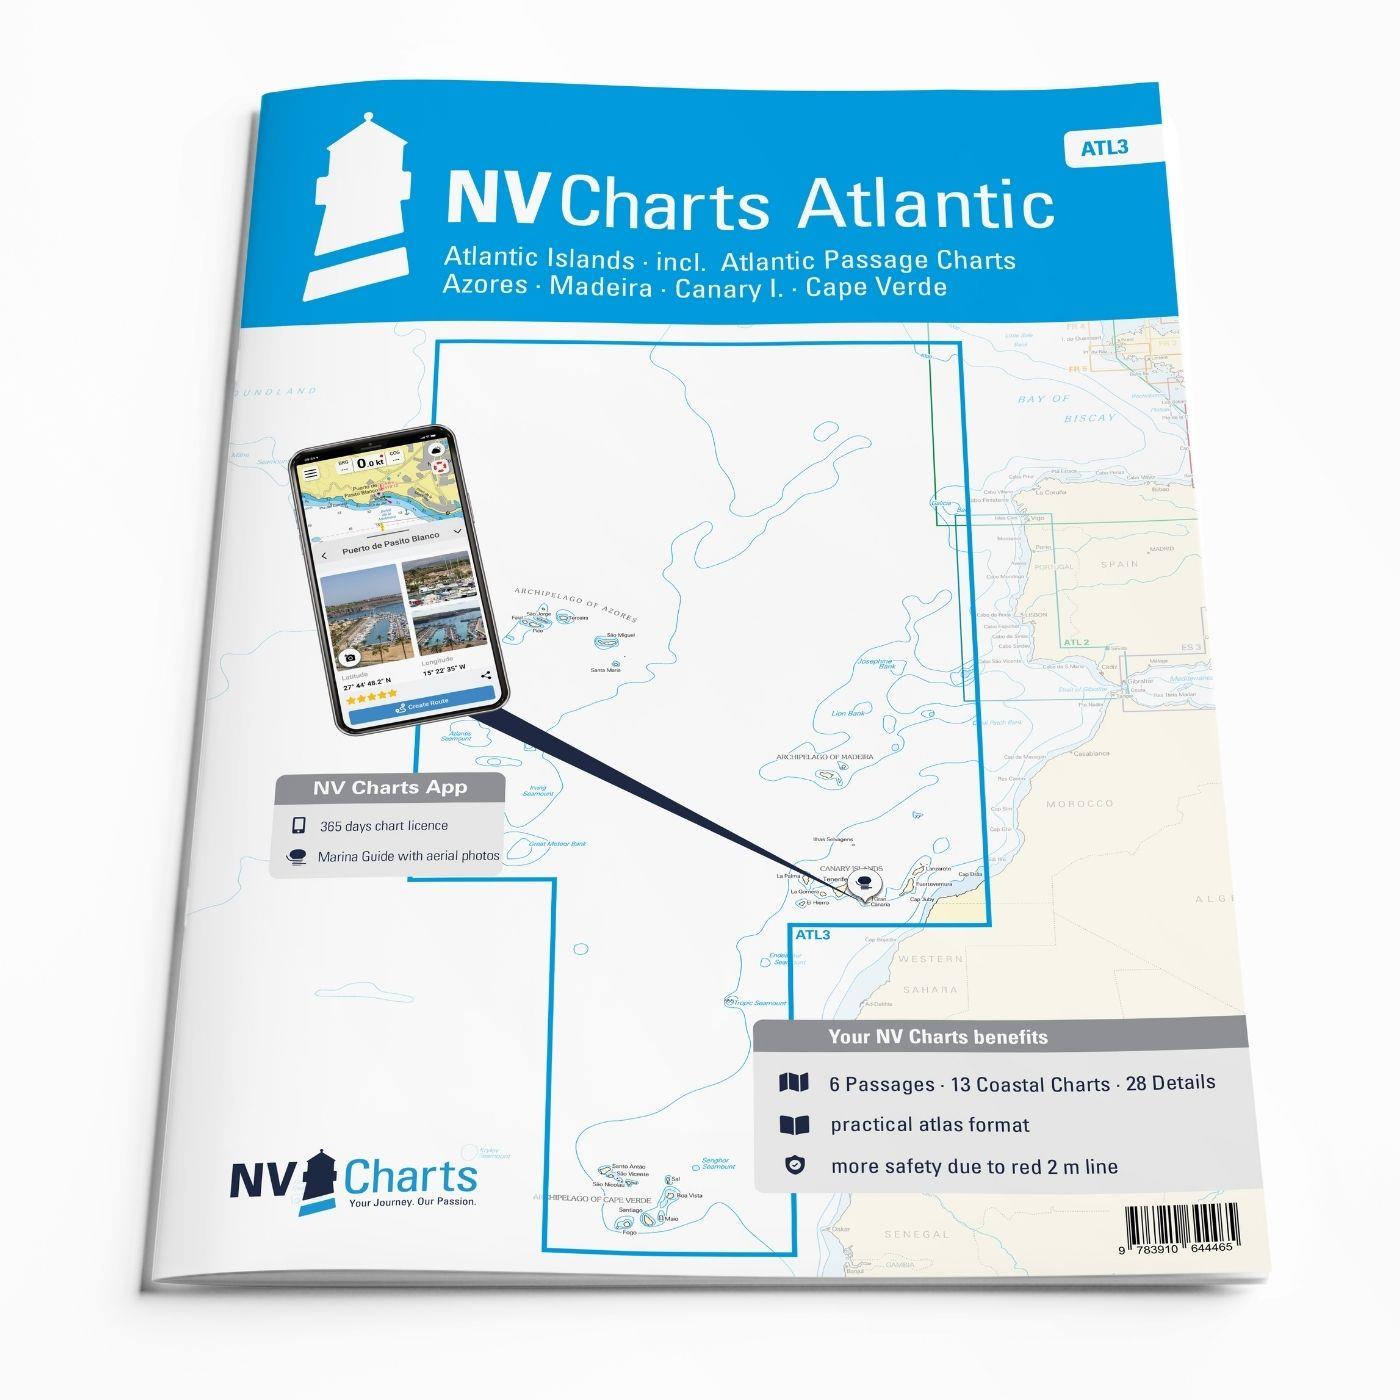 NV Charts Atlantic ATL3 - Atlantic Islands Azores - Madeira, Canary Islands, Cape Verde 